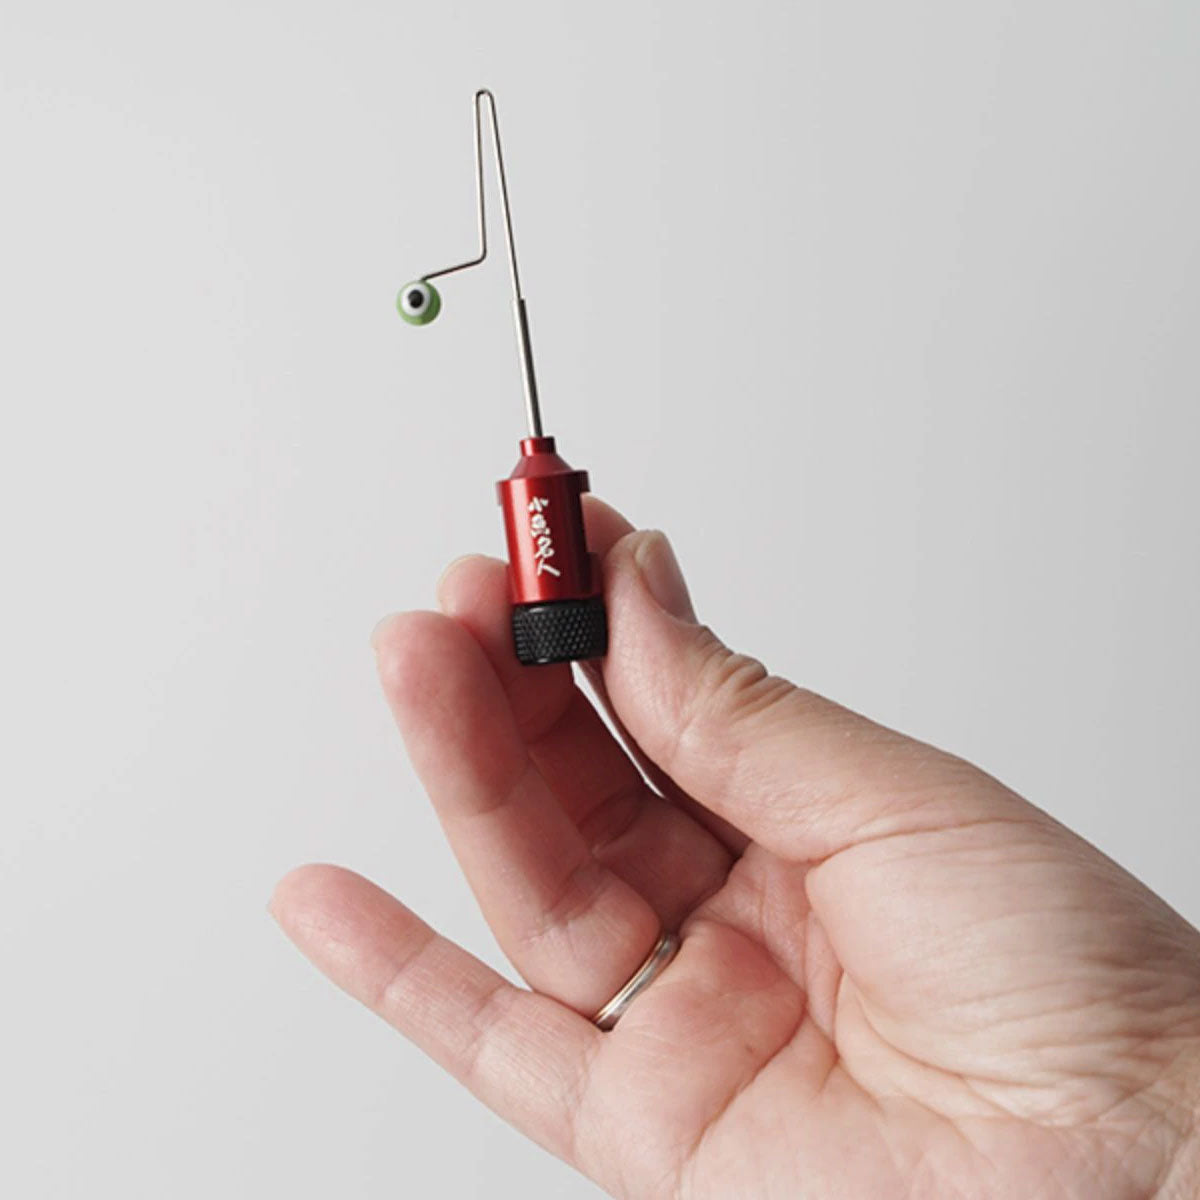 Micro fishing hook removal tool